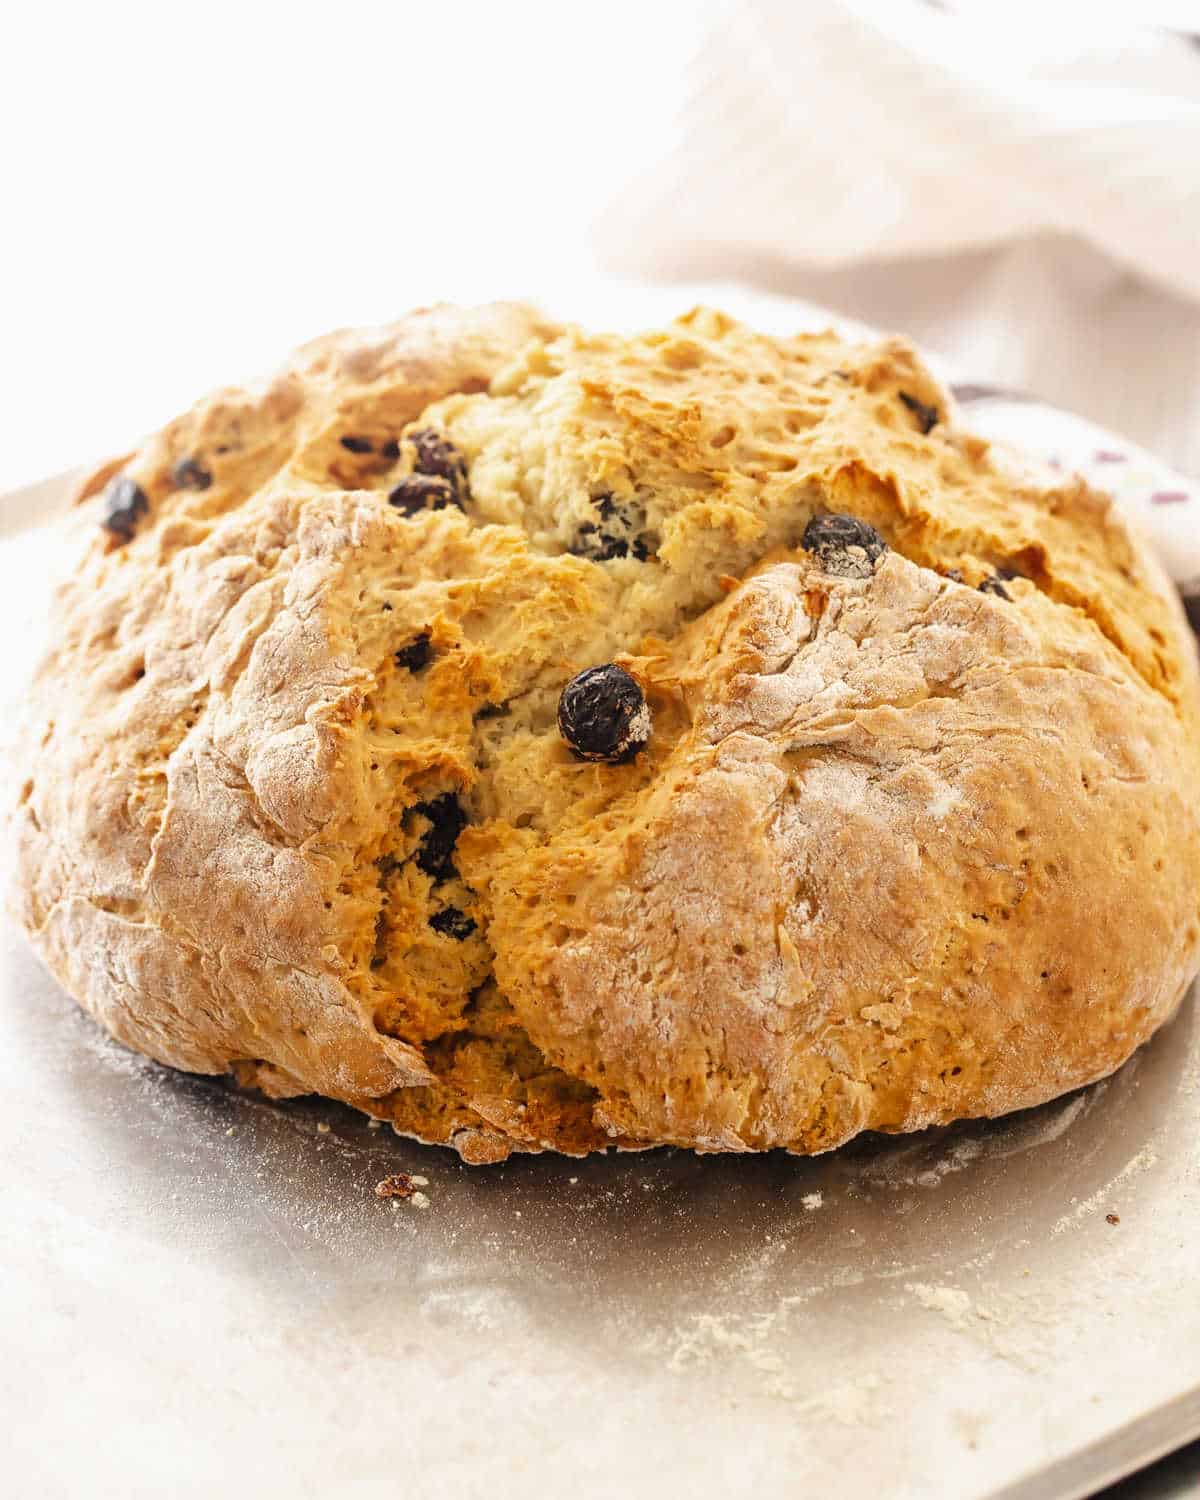 Metal baking sheet with baked round Irish soda bread with raisins.